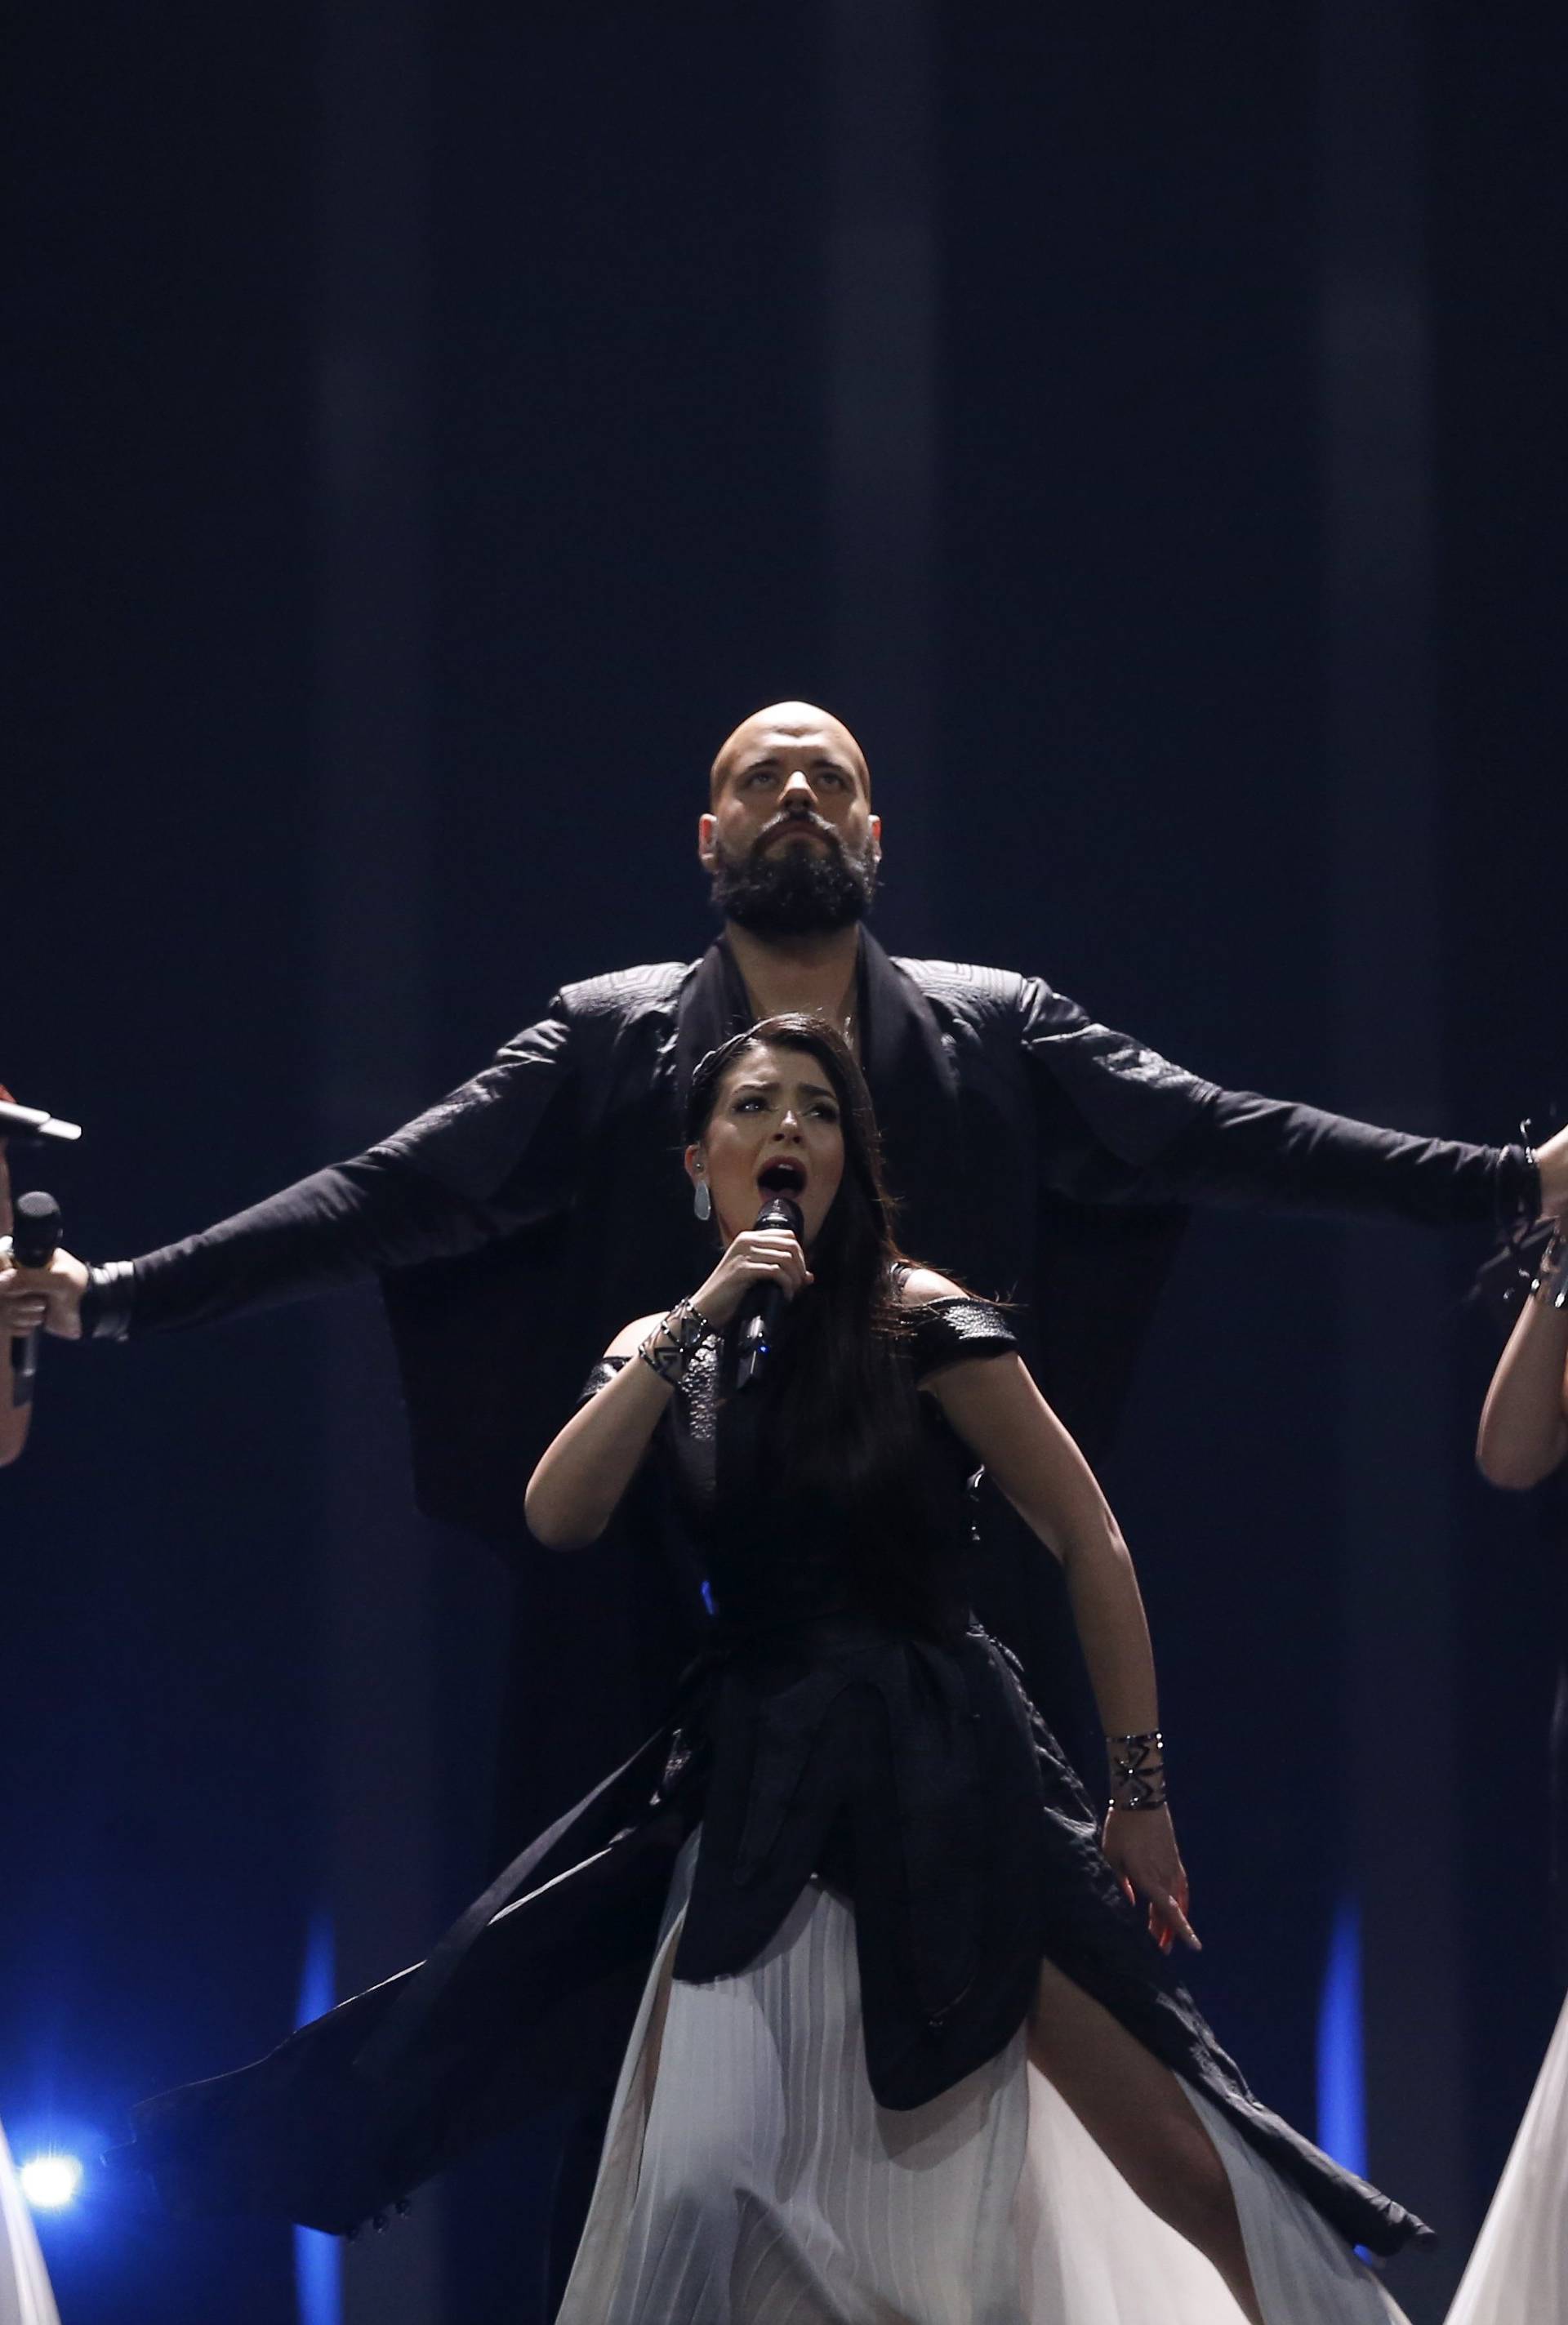 Serbiaâs Sanja Ilic & Balkanika perform âNova Decaâ during the Semi-Final 2 for Eurovision Song Contest 2018 in Lisbon